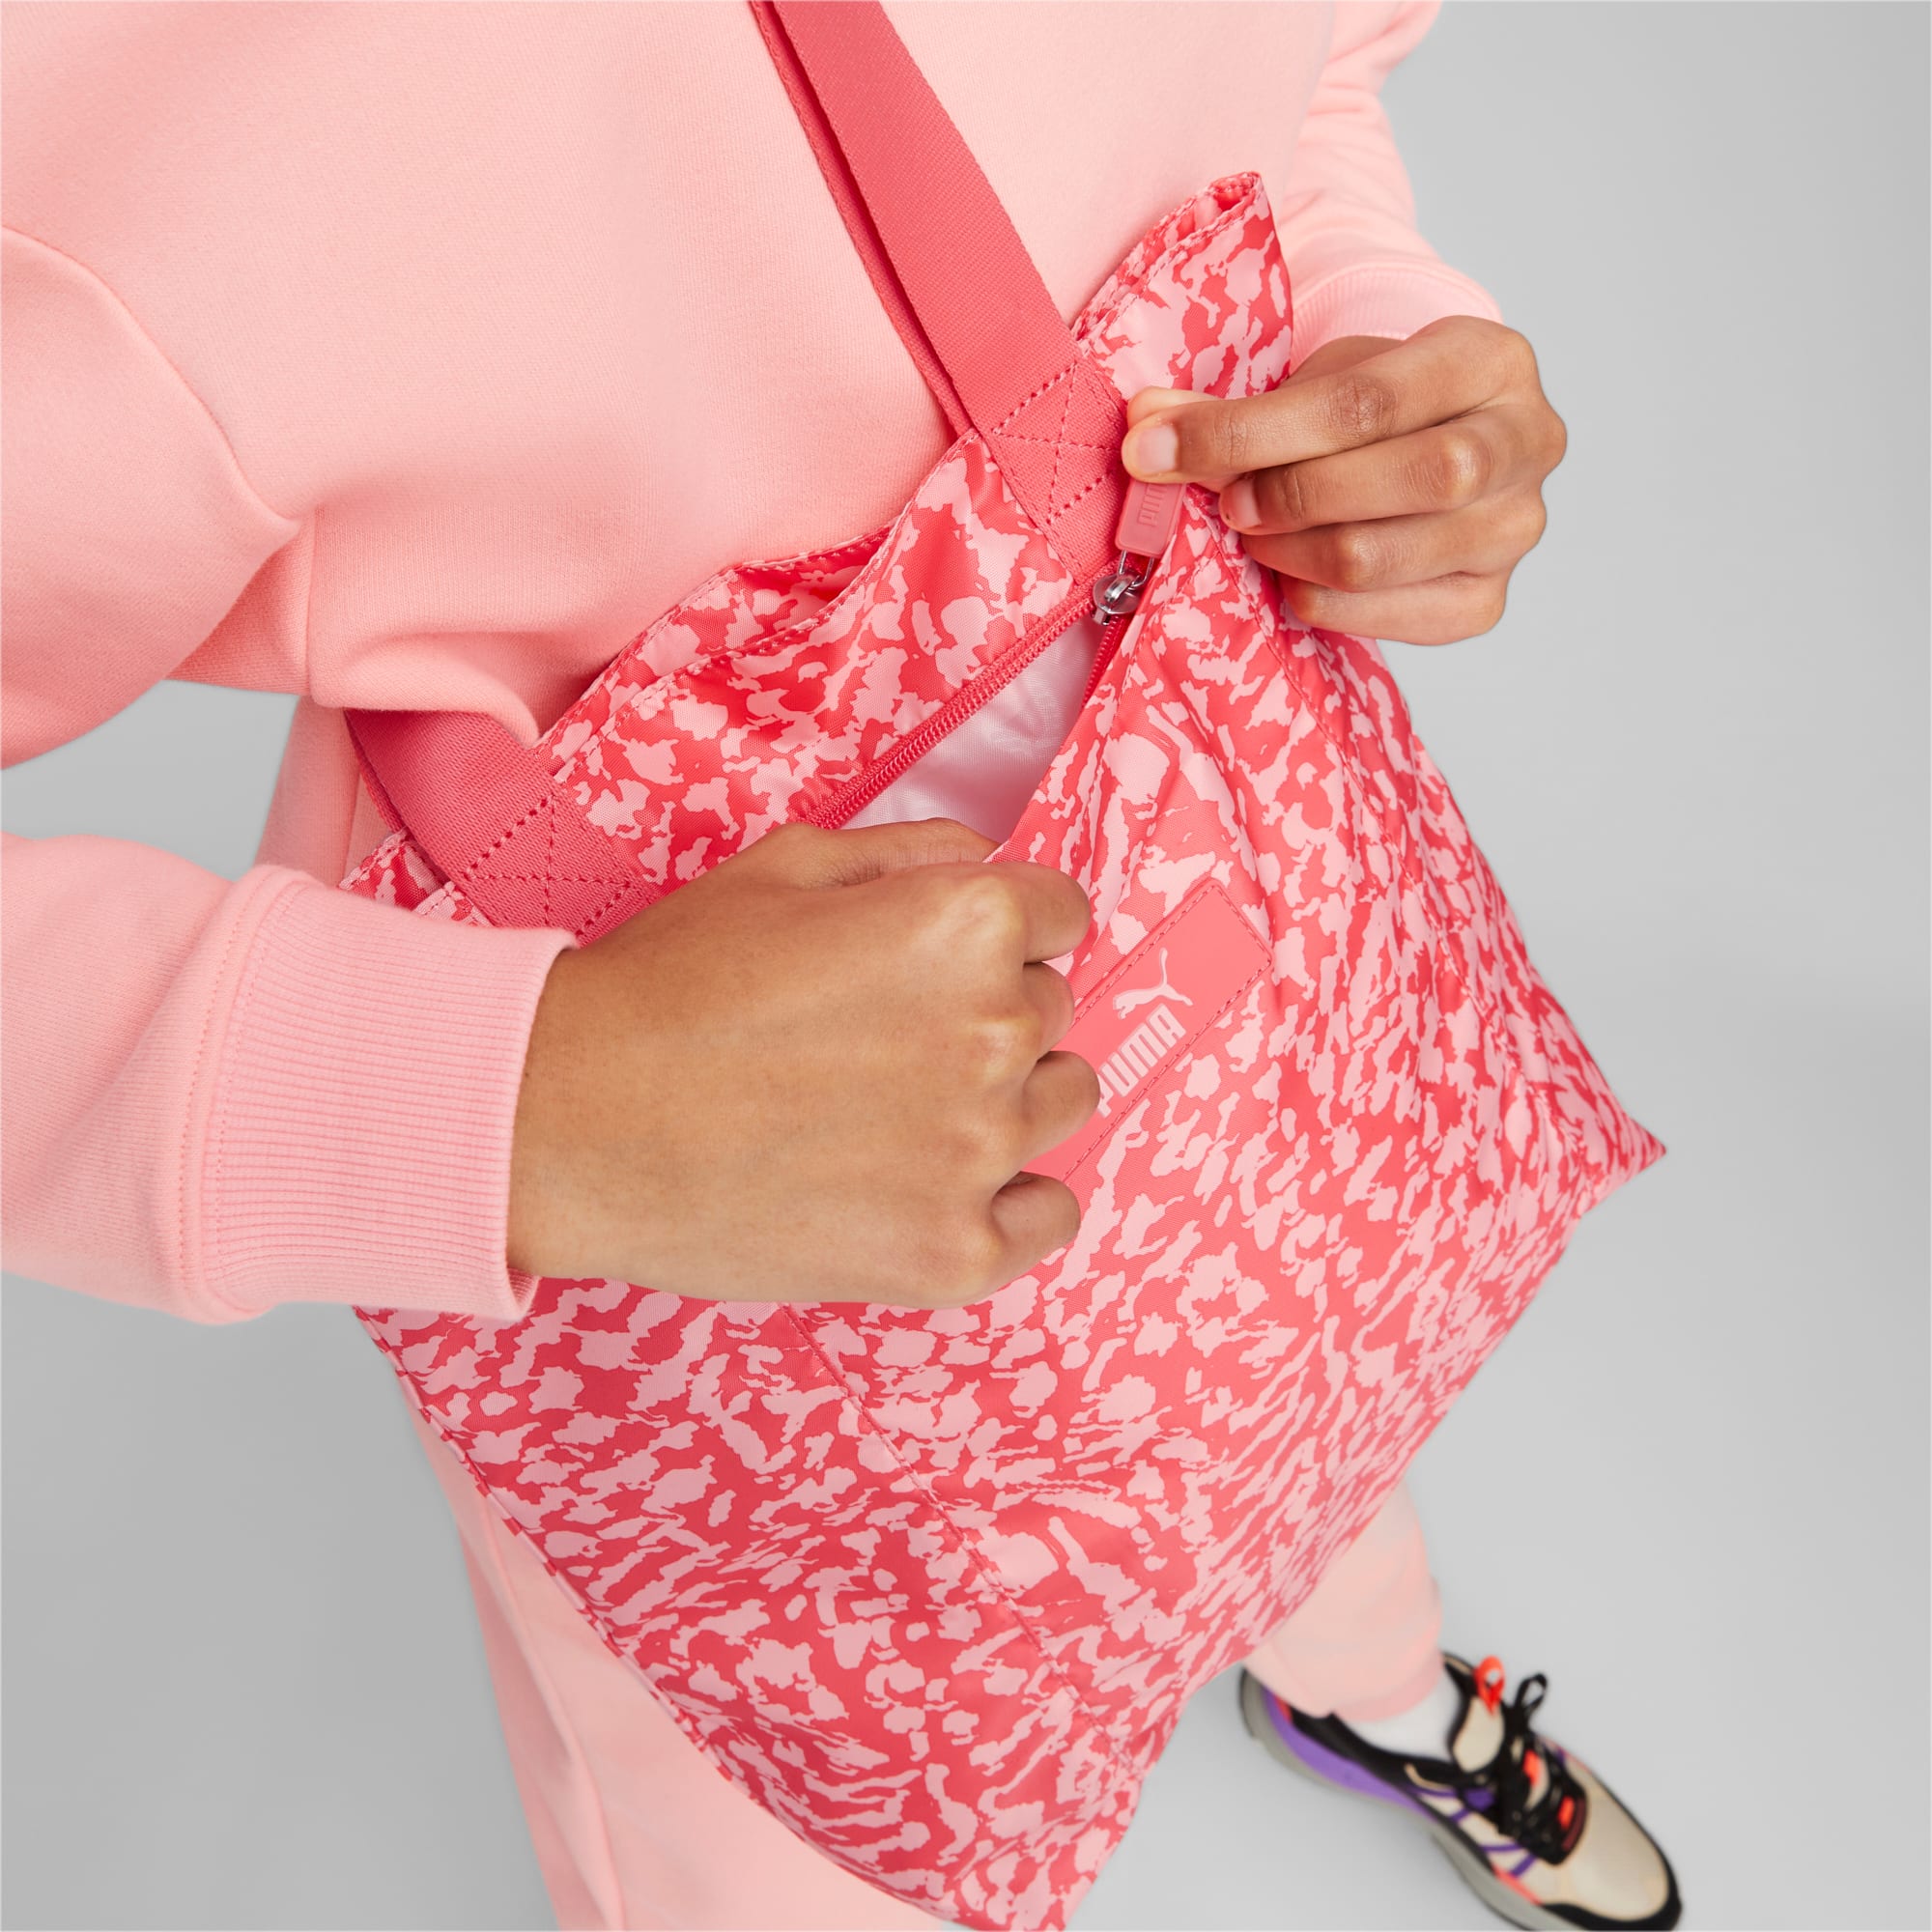 Women's PUMA Core Pop Shopper Bag, Peach Smoothie/Electric Blush/AOP, Accessories